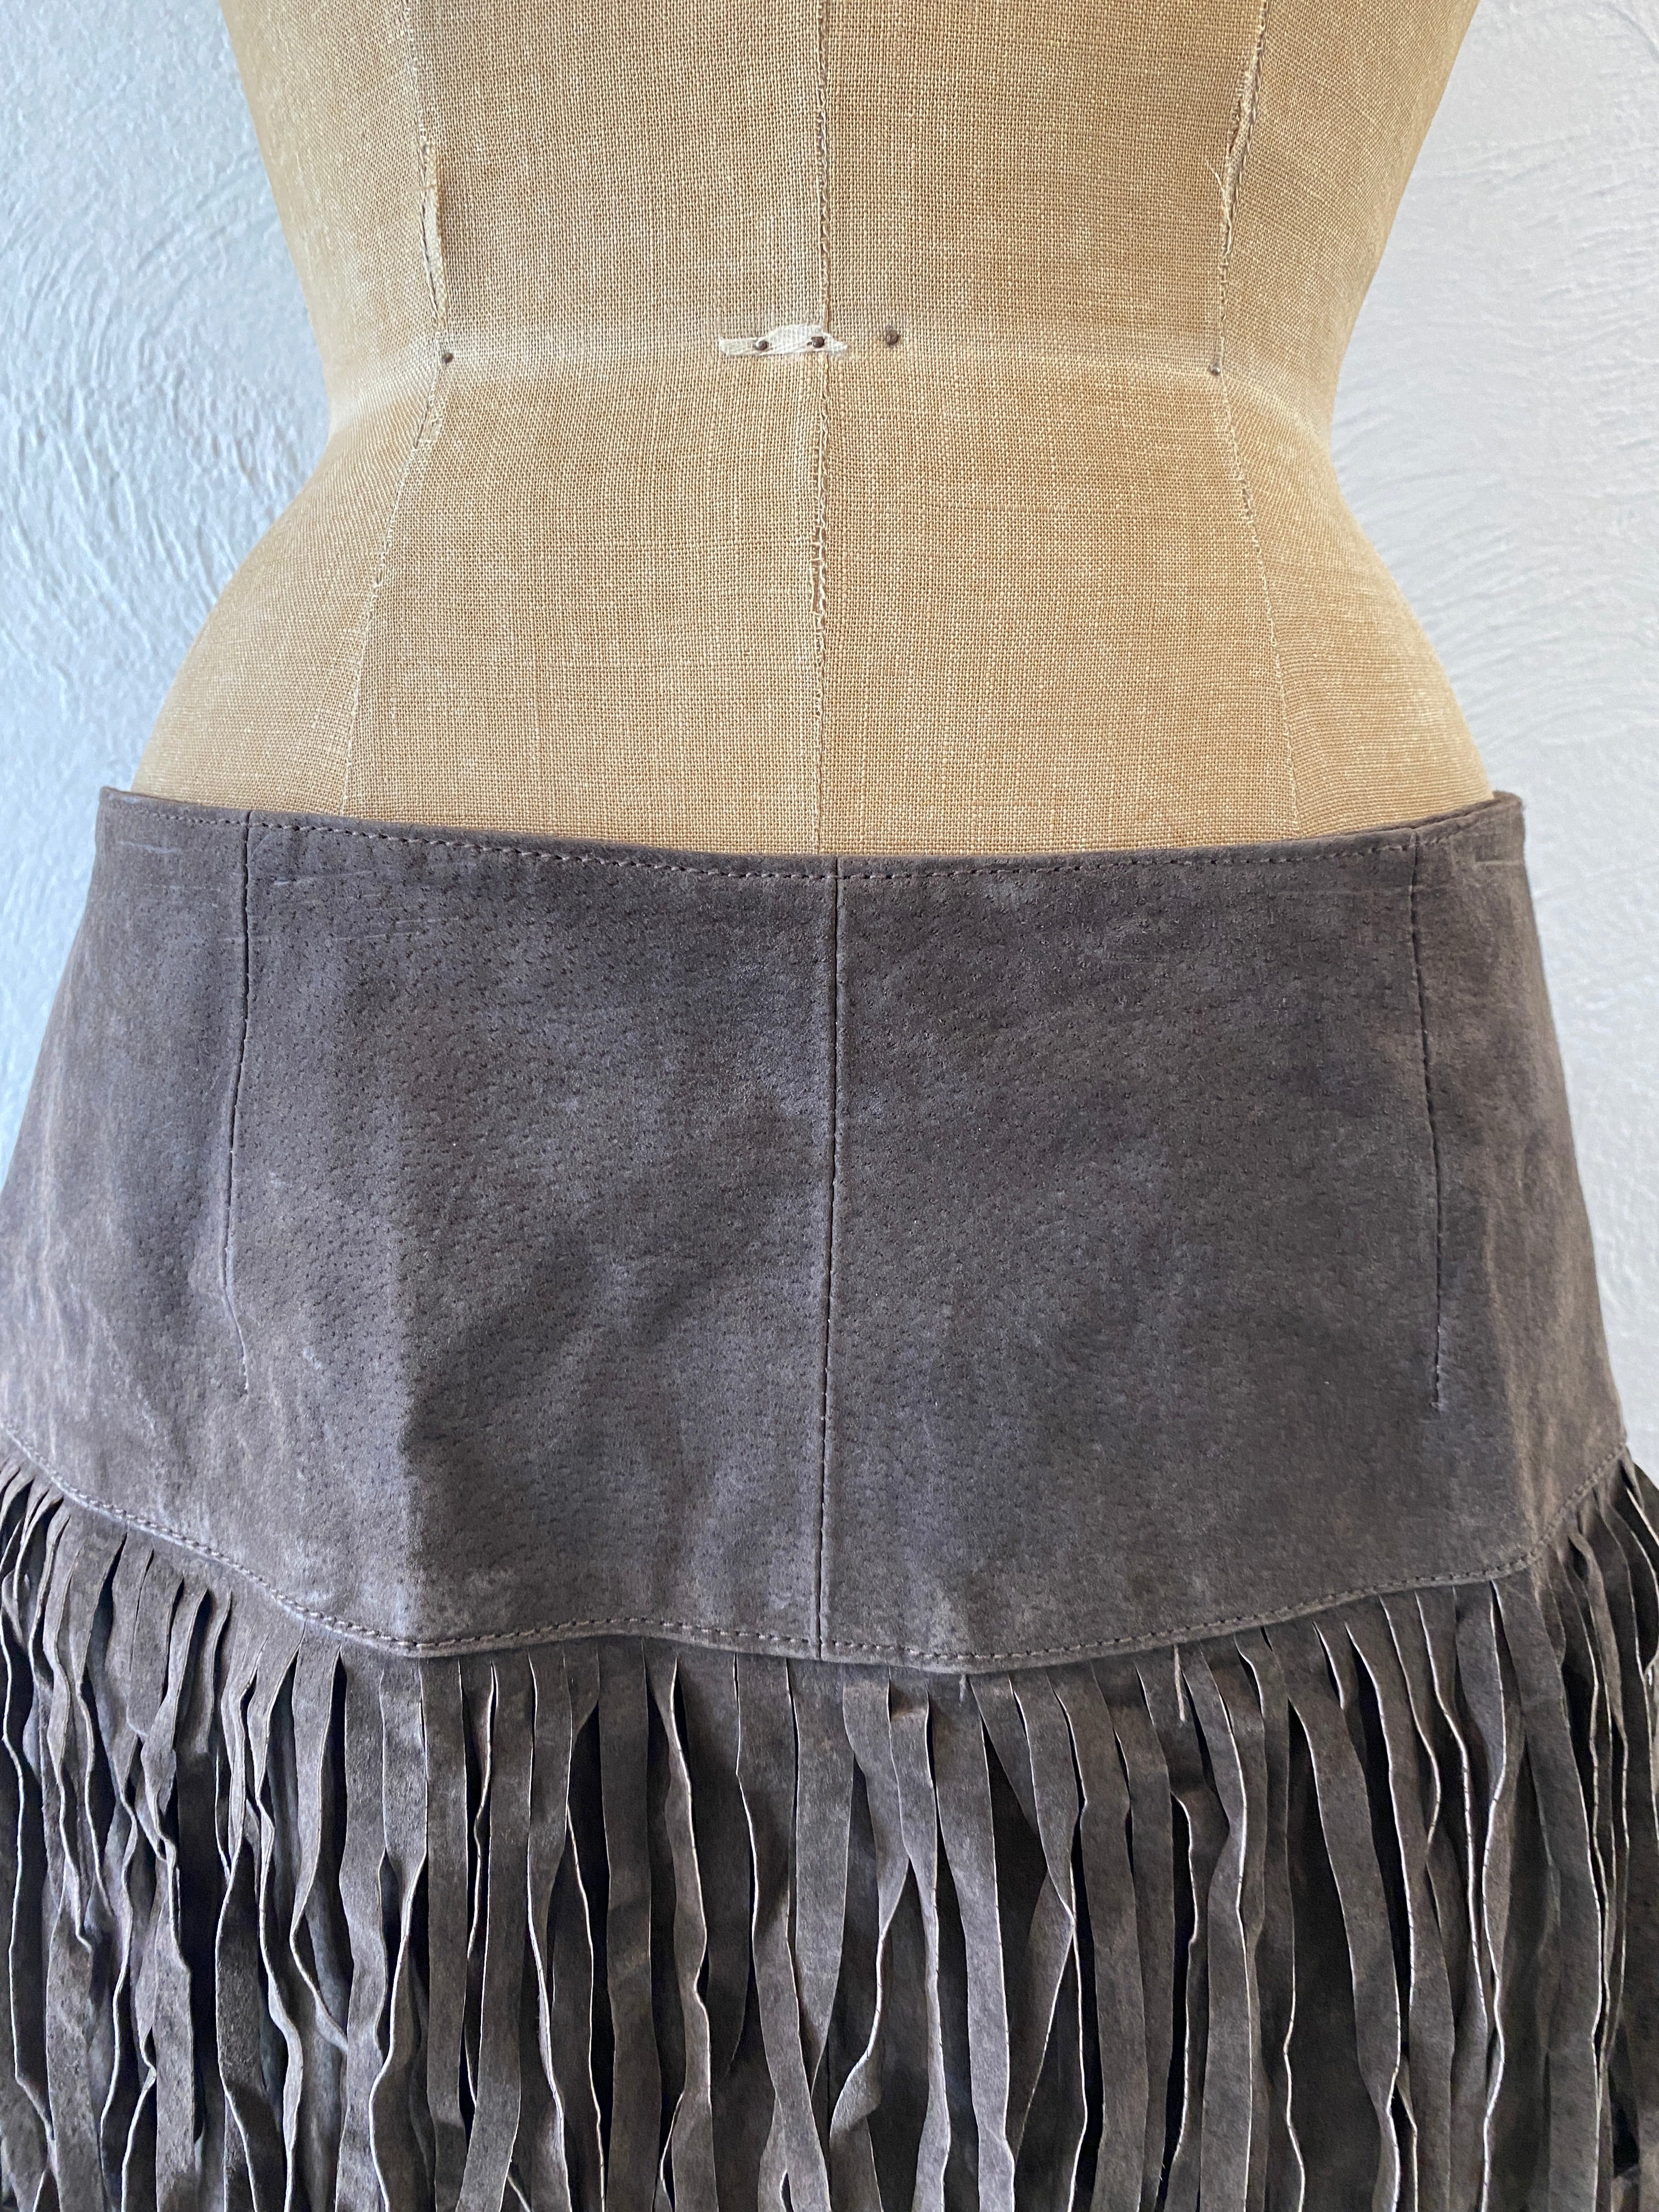 leather fringe skirt